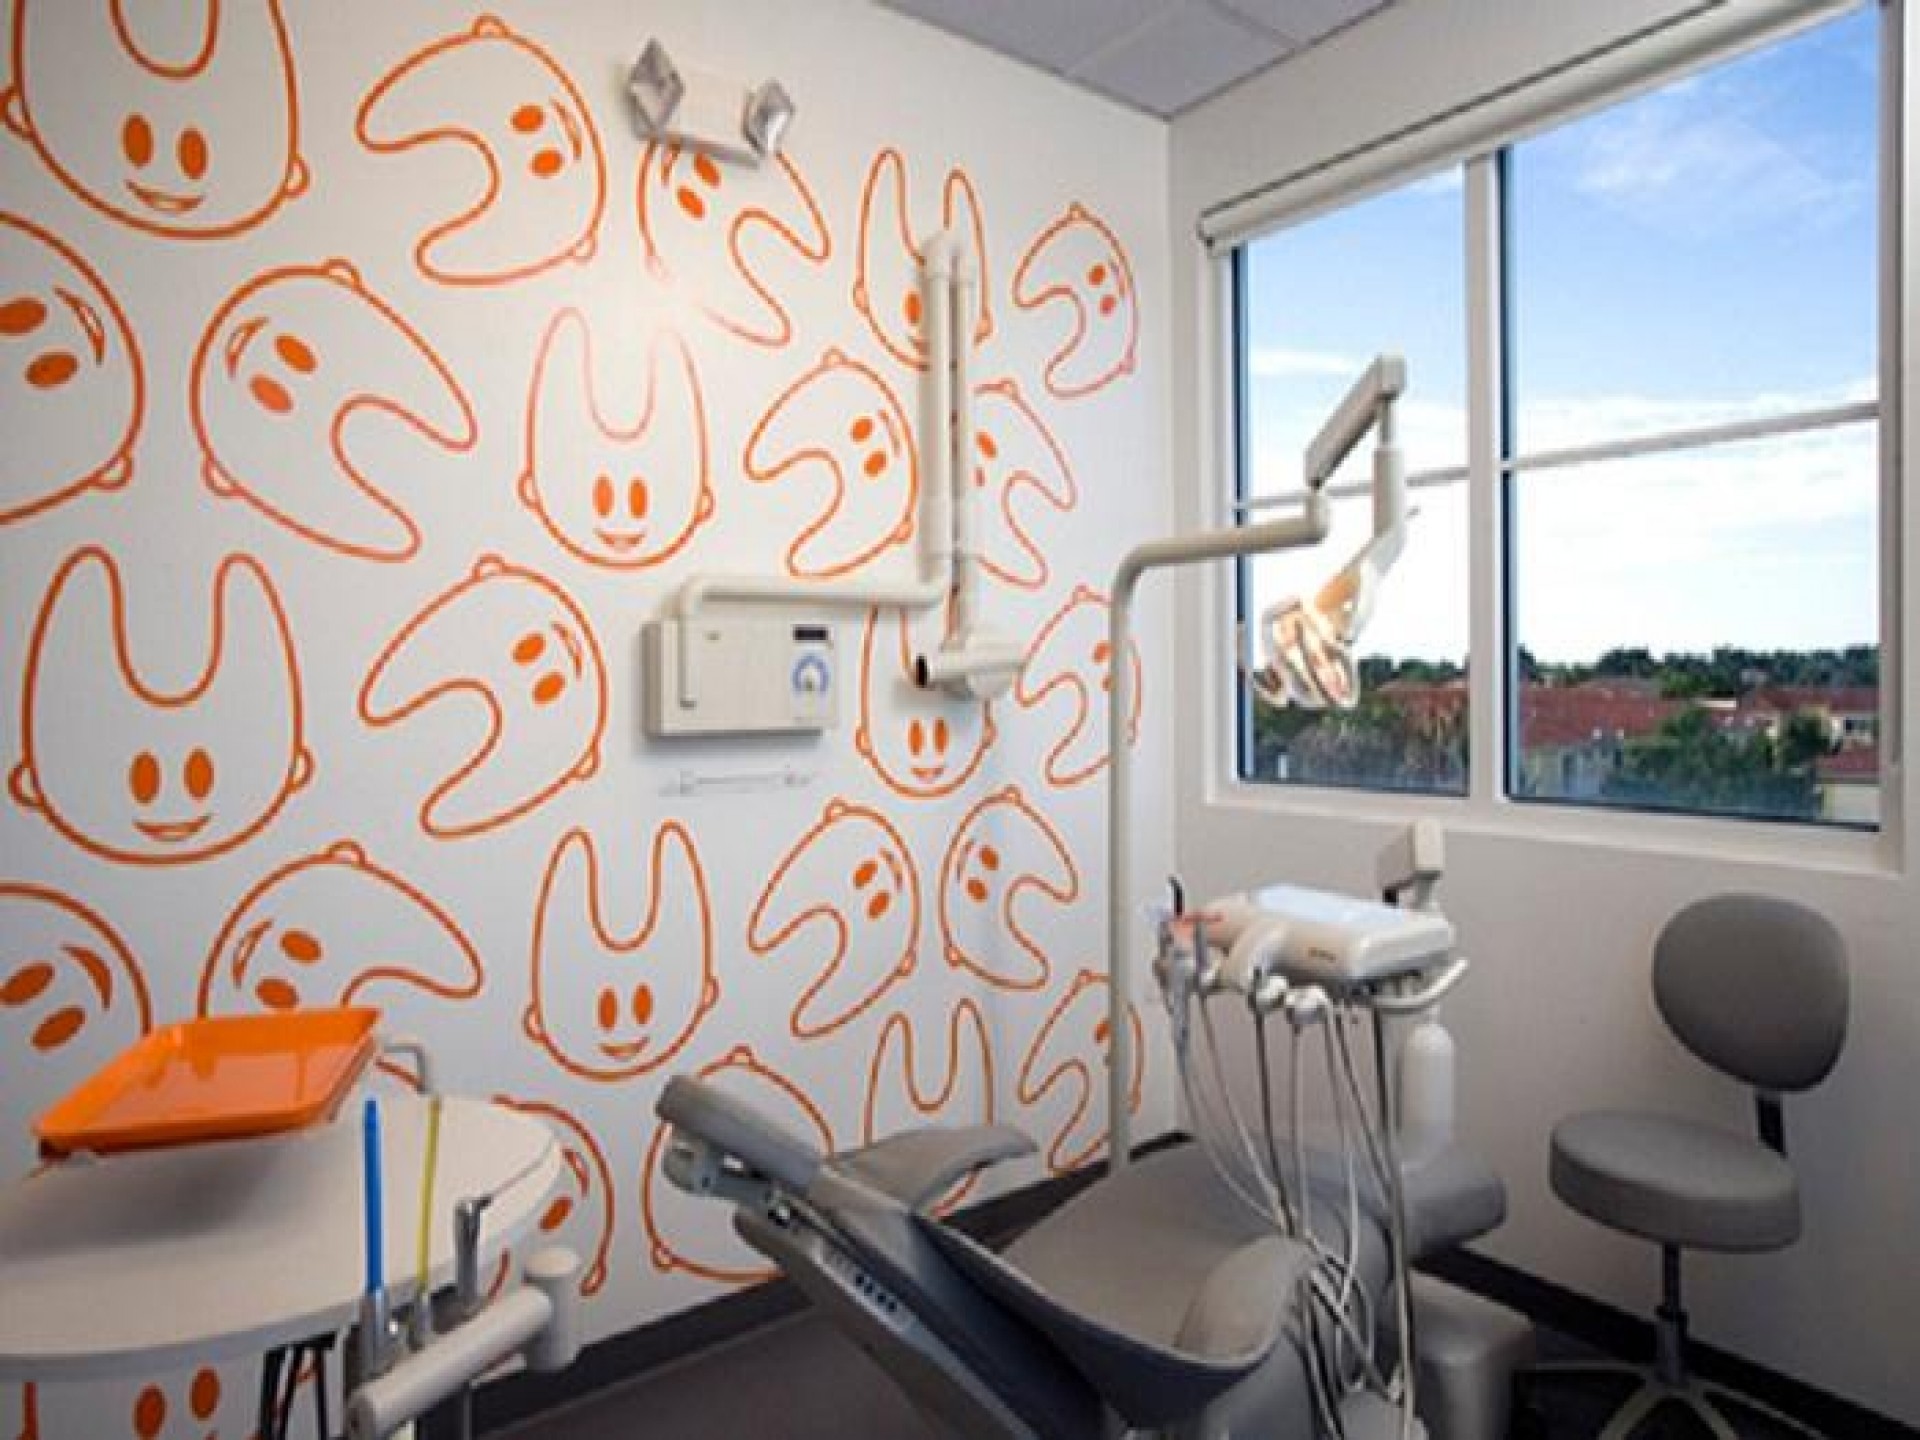 Home Office - Dental Clinic Interior Design - 1920x1440 Wallpaper -  